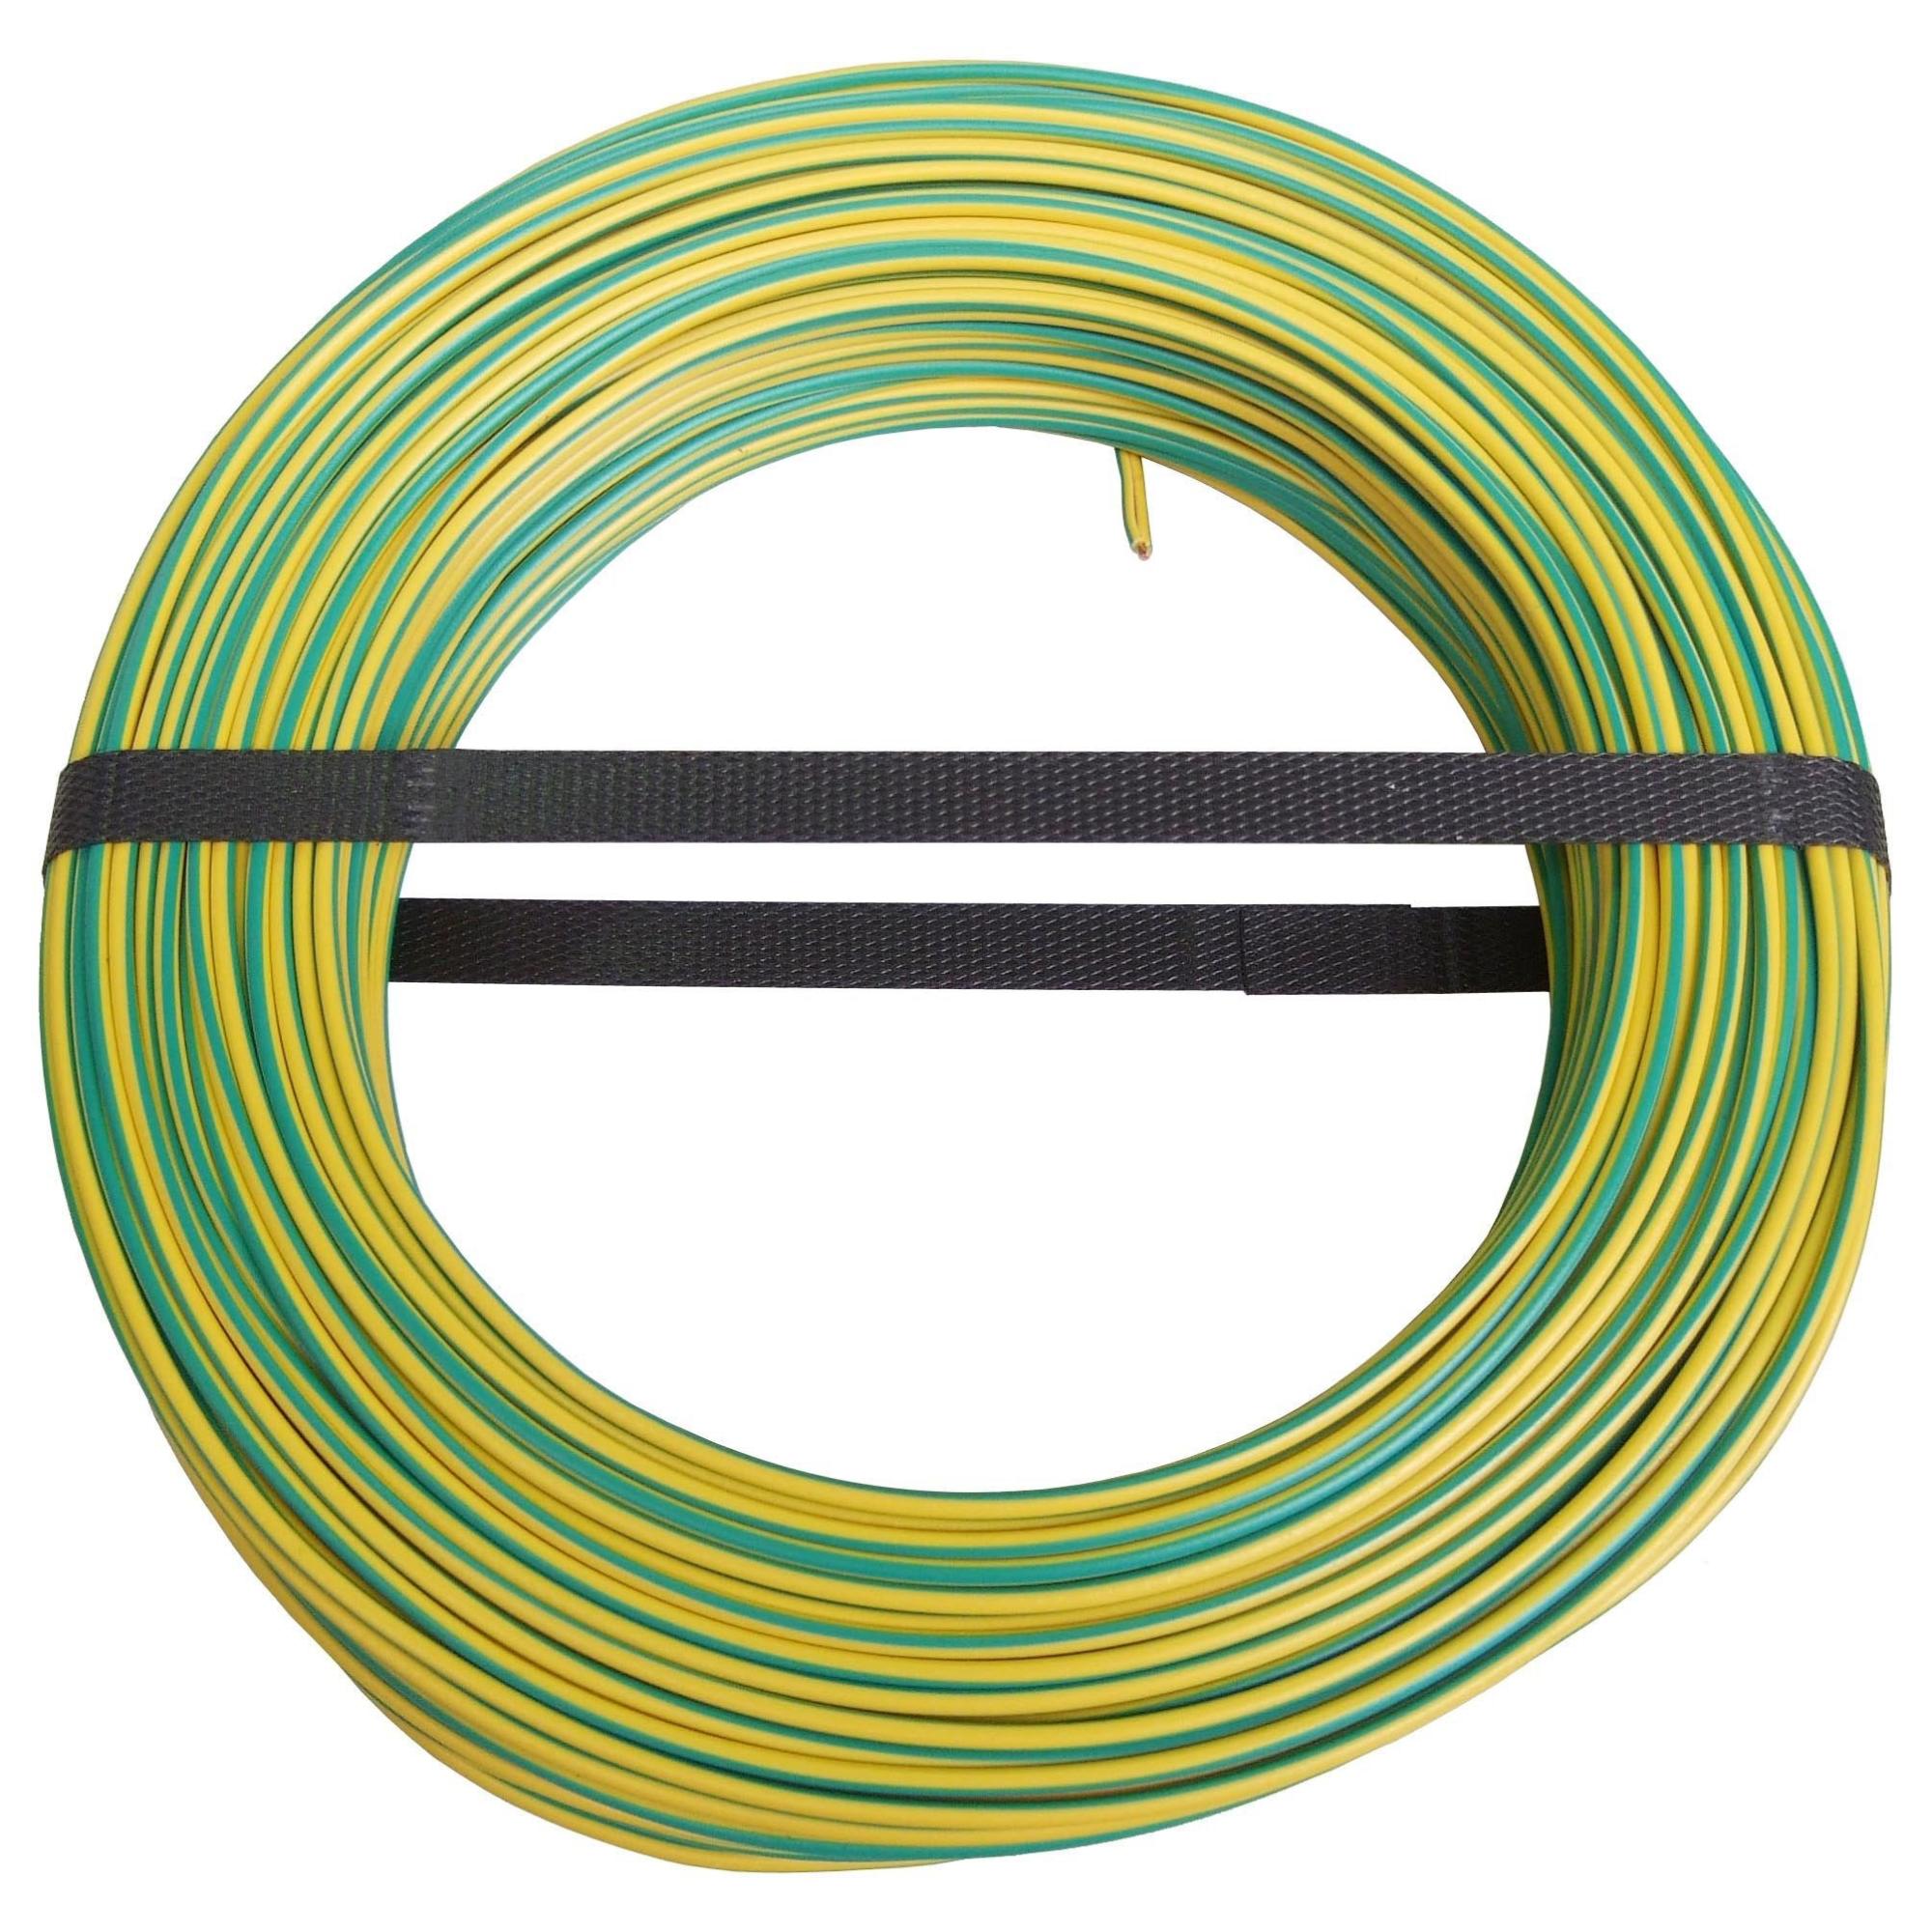 Bobine 25m de câble terre 6mm² jaune et vert H07VR